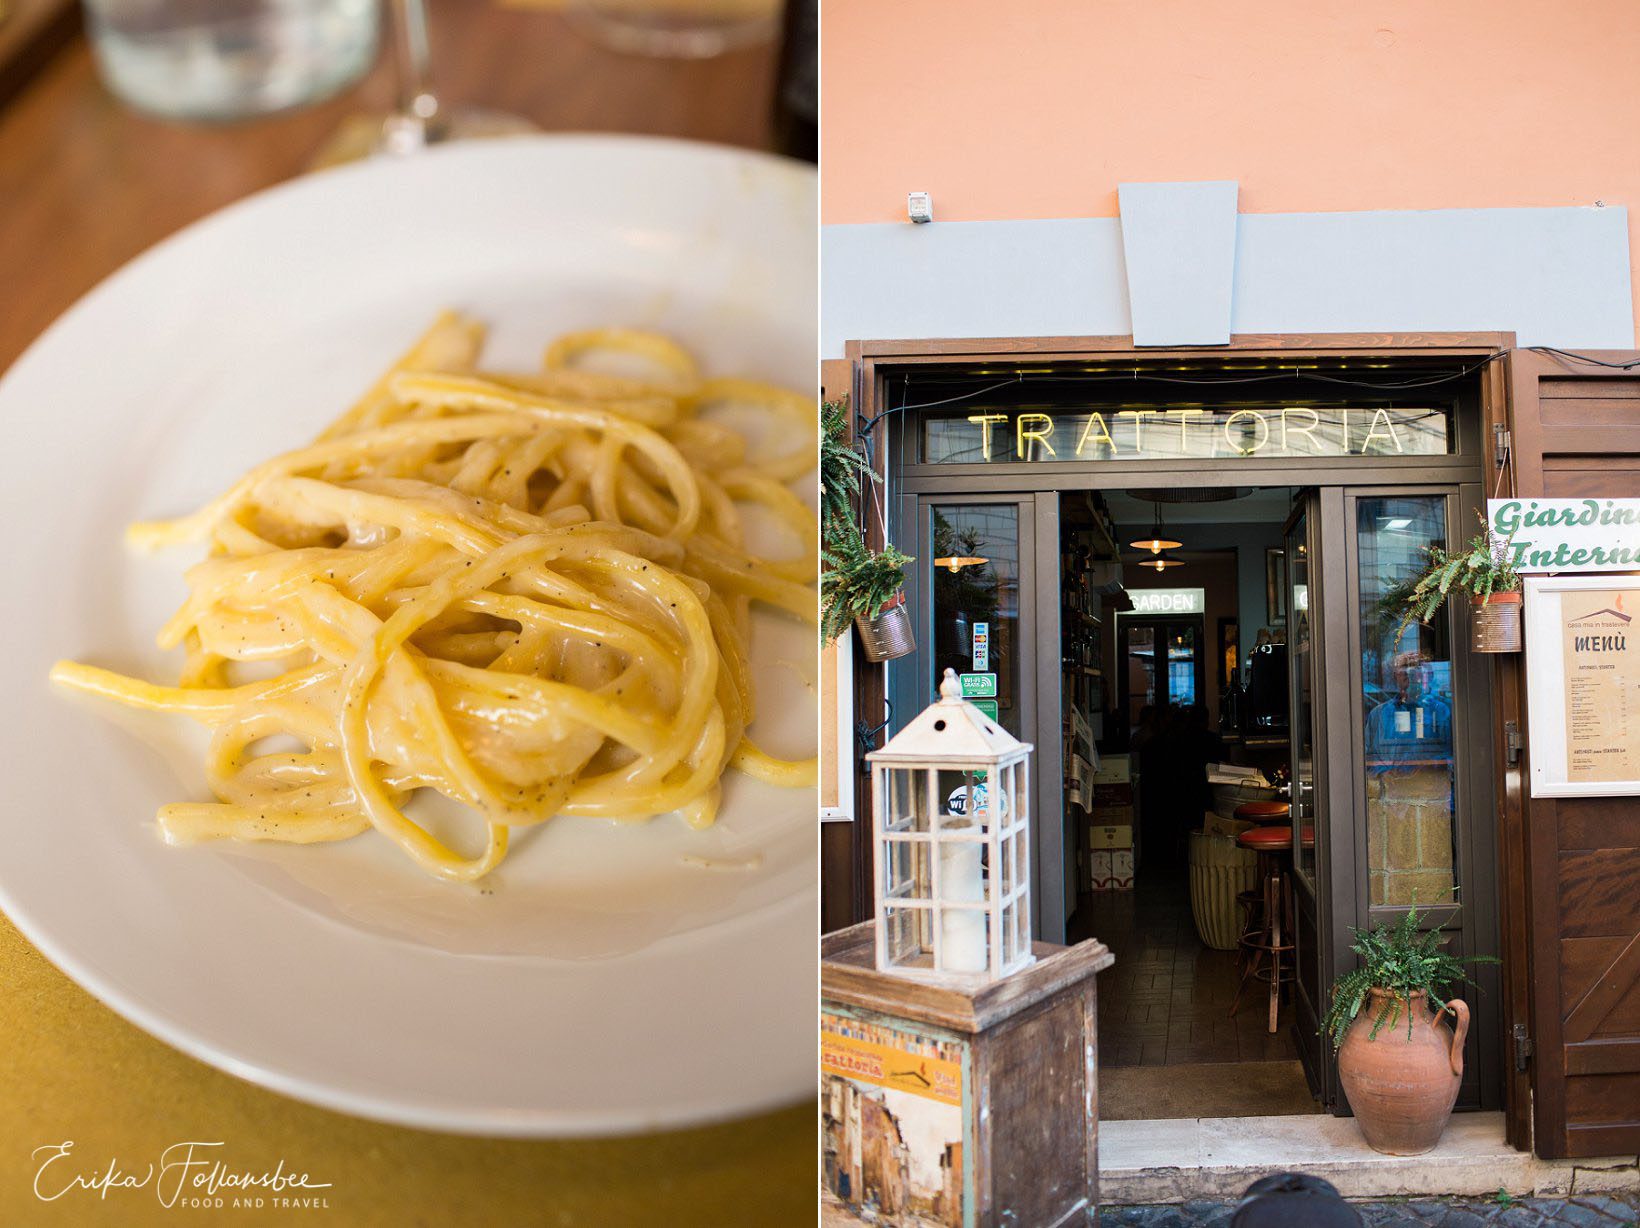 2 kinds of Roman pasta sampled at Casa Mia in Trastevere